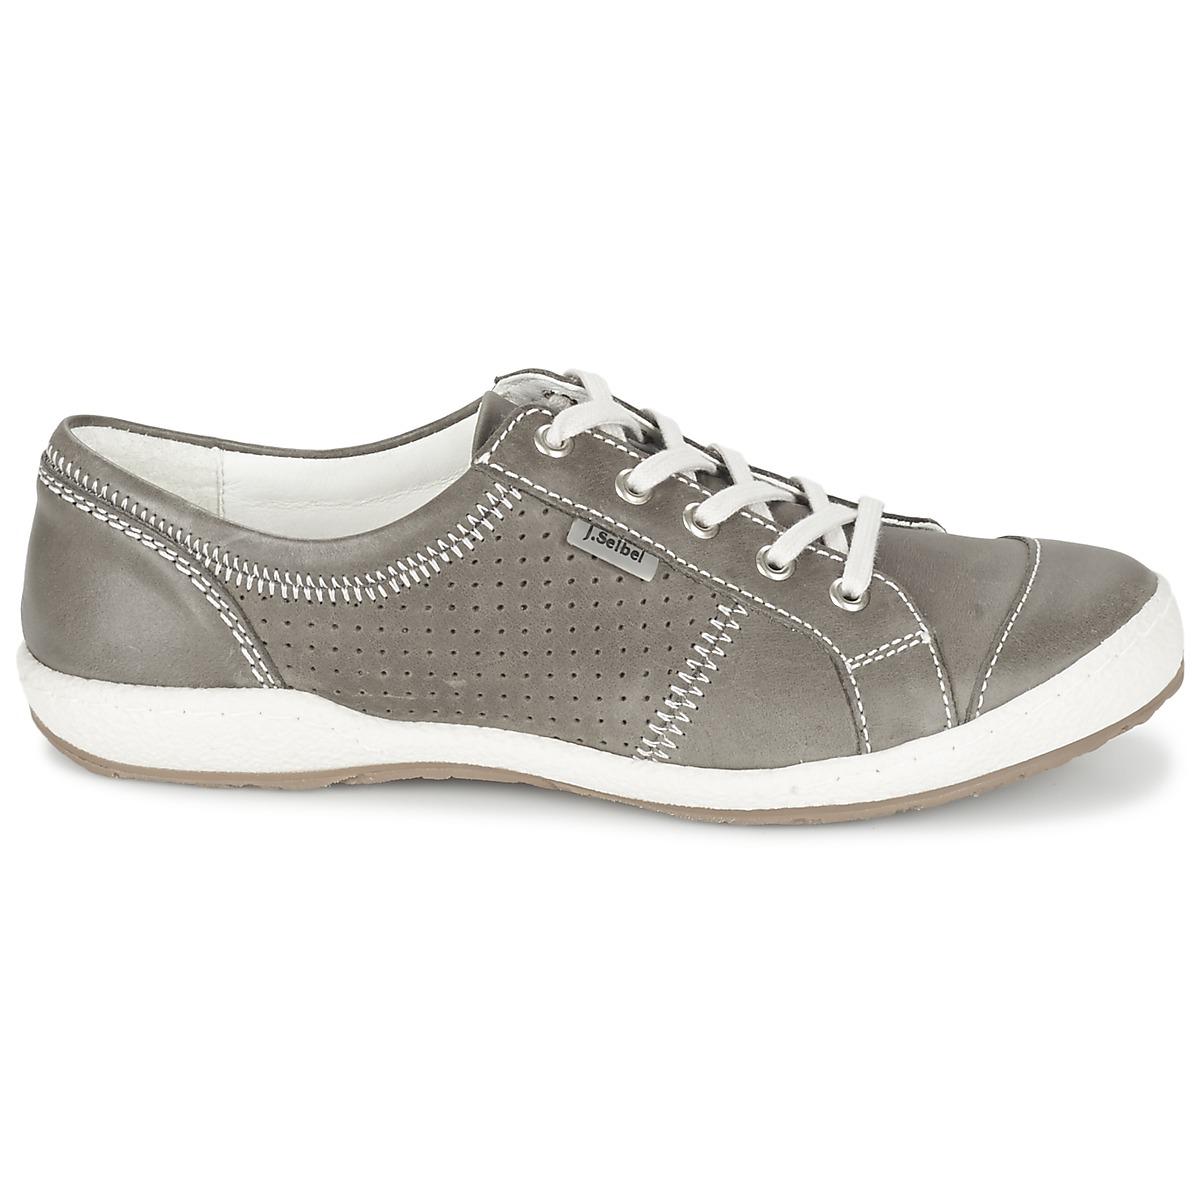 Josef Seibel Leather Caspian Shoes (trainers) in Grey (Grey) - Lyst